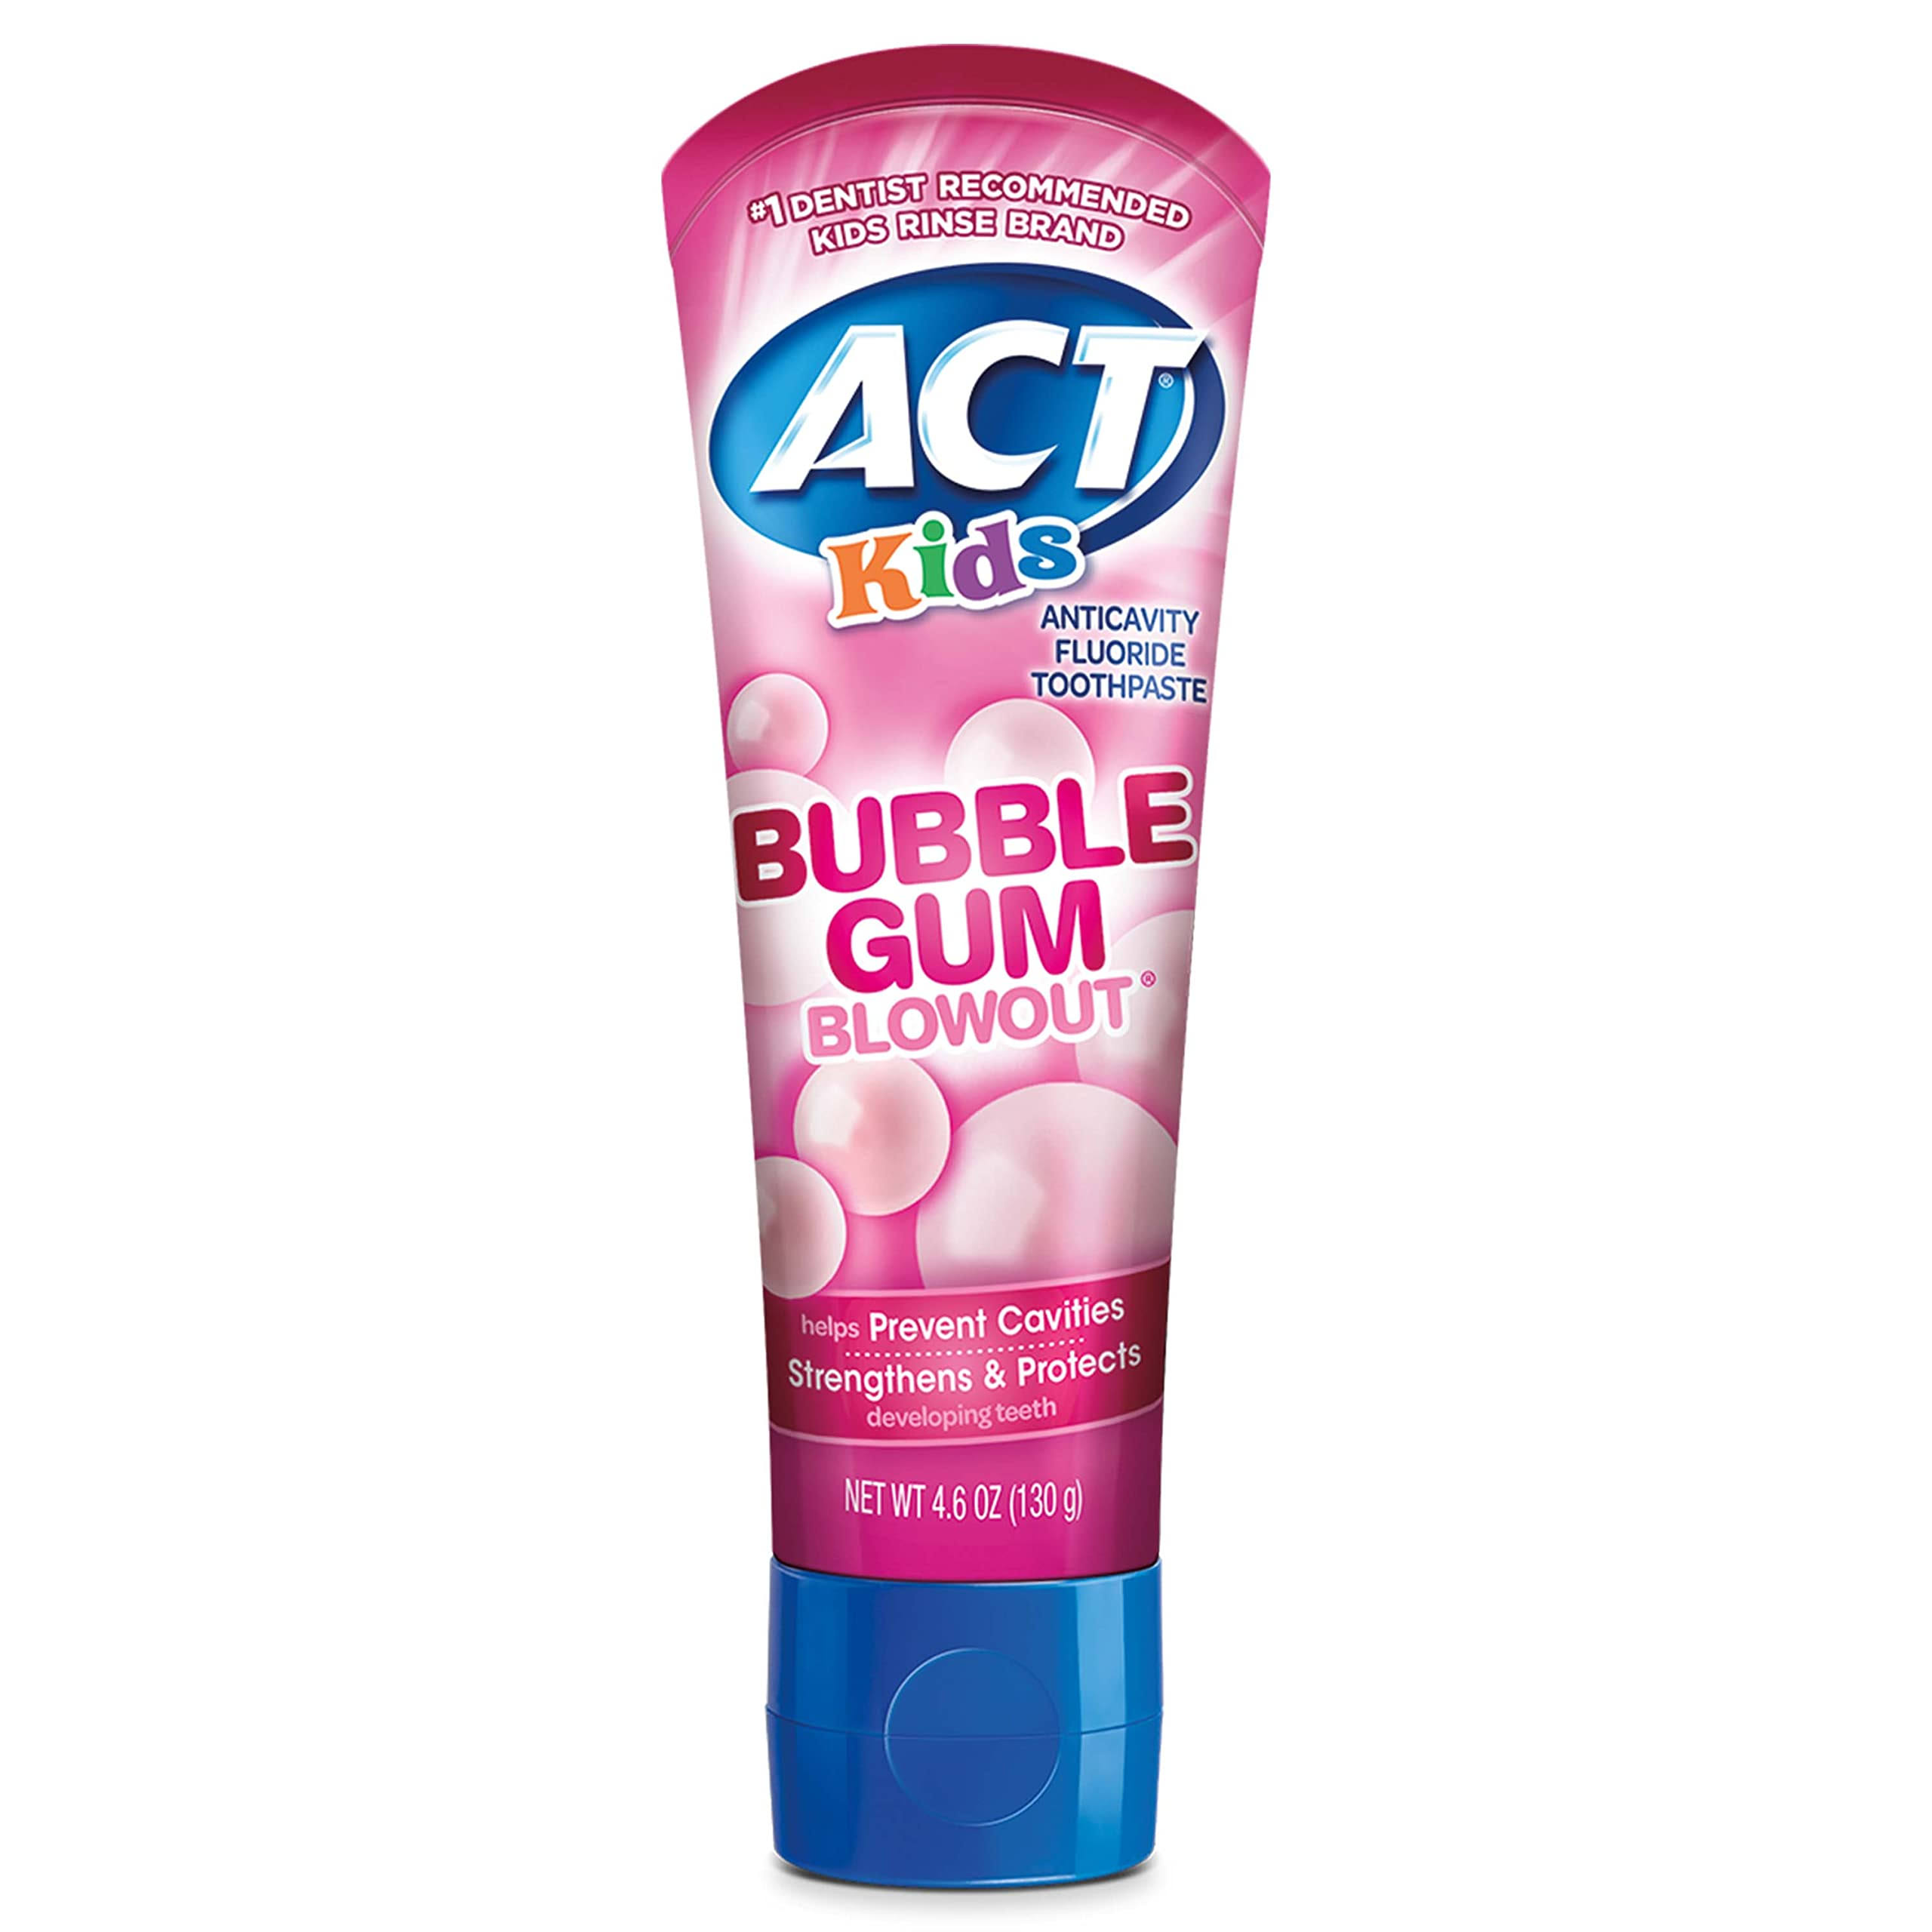 Act Kids Anticavity Fluoride Toothpaste 4.6 oz. Bubble Gum Blowout